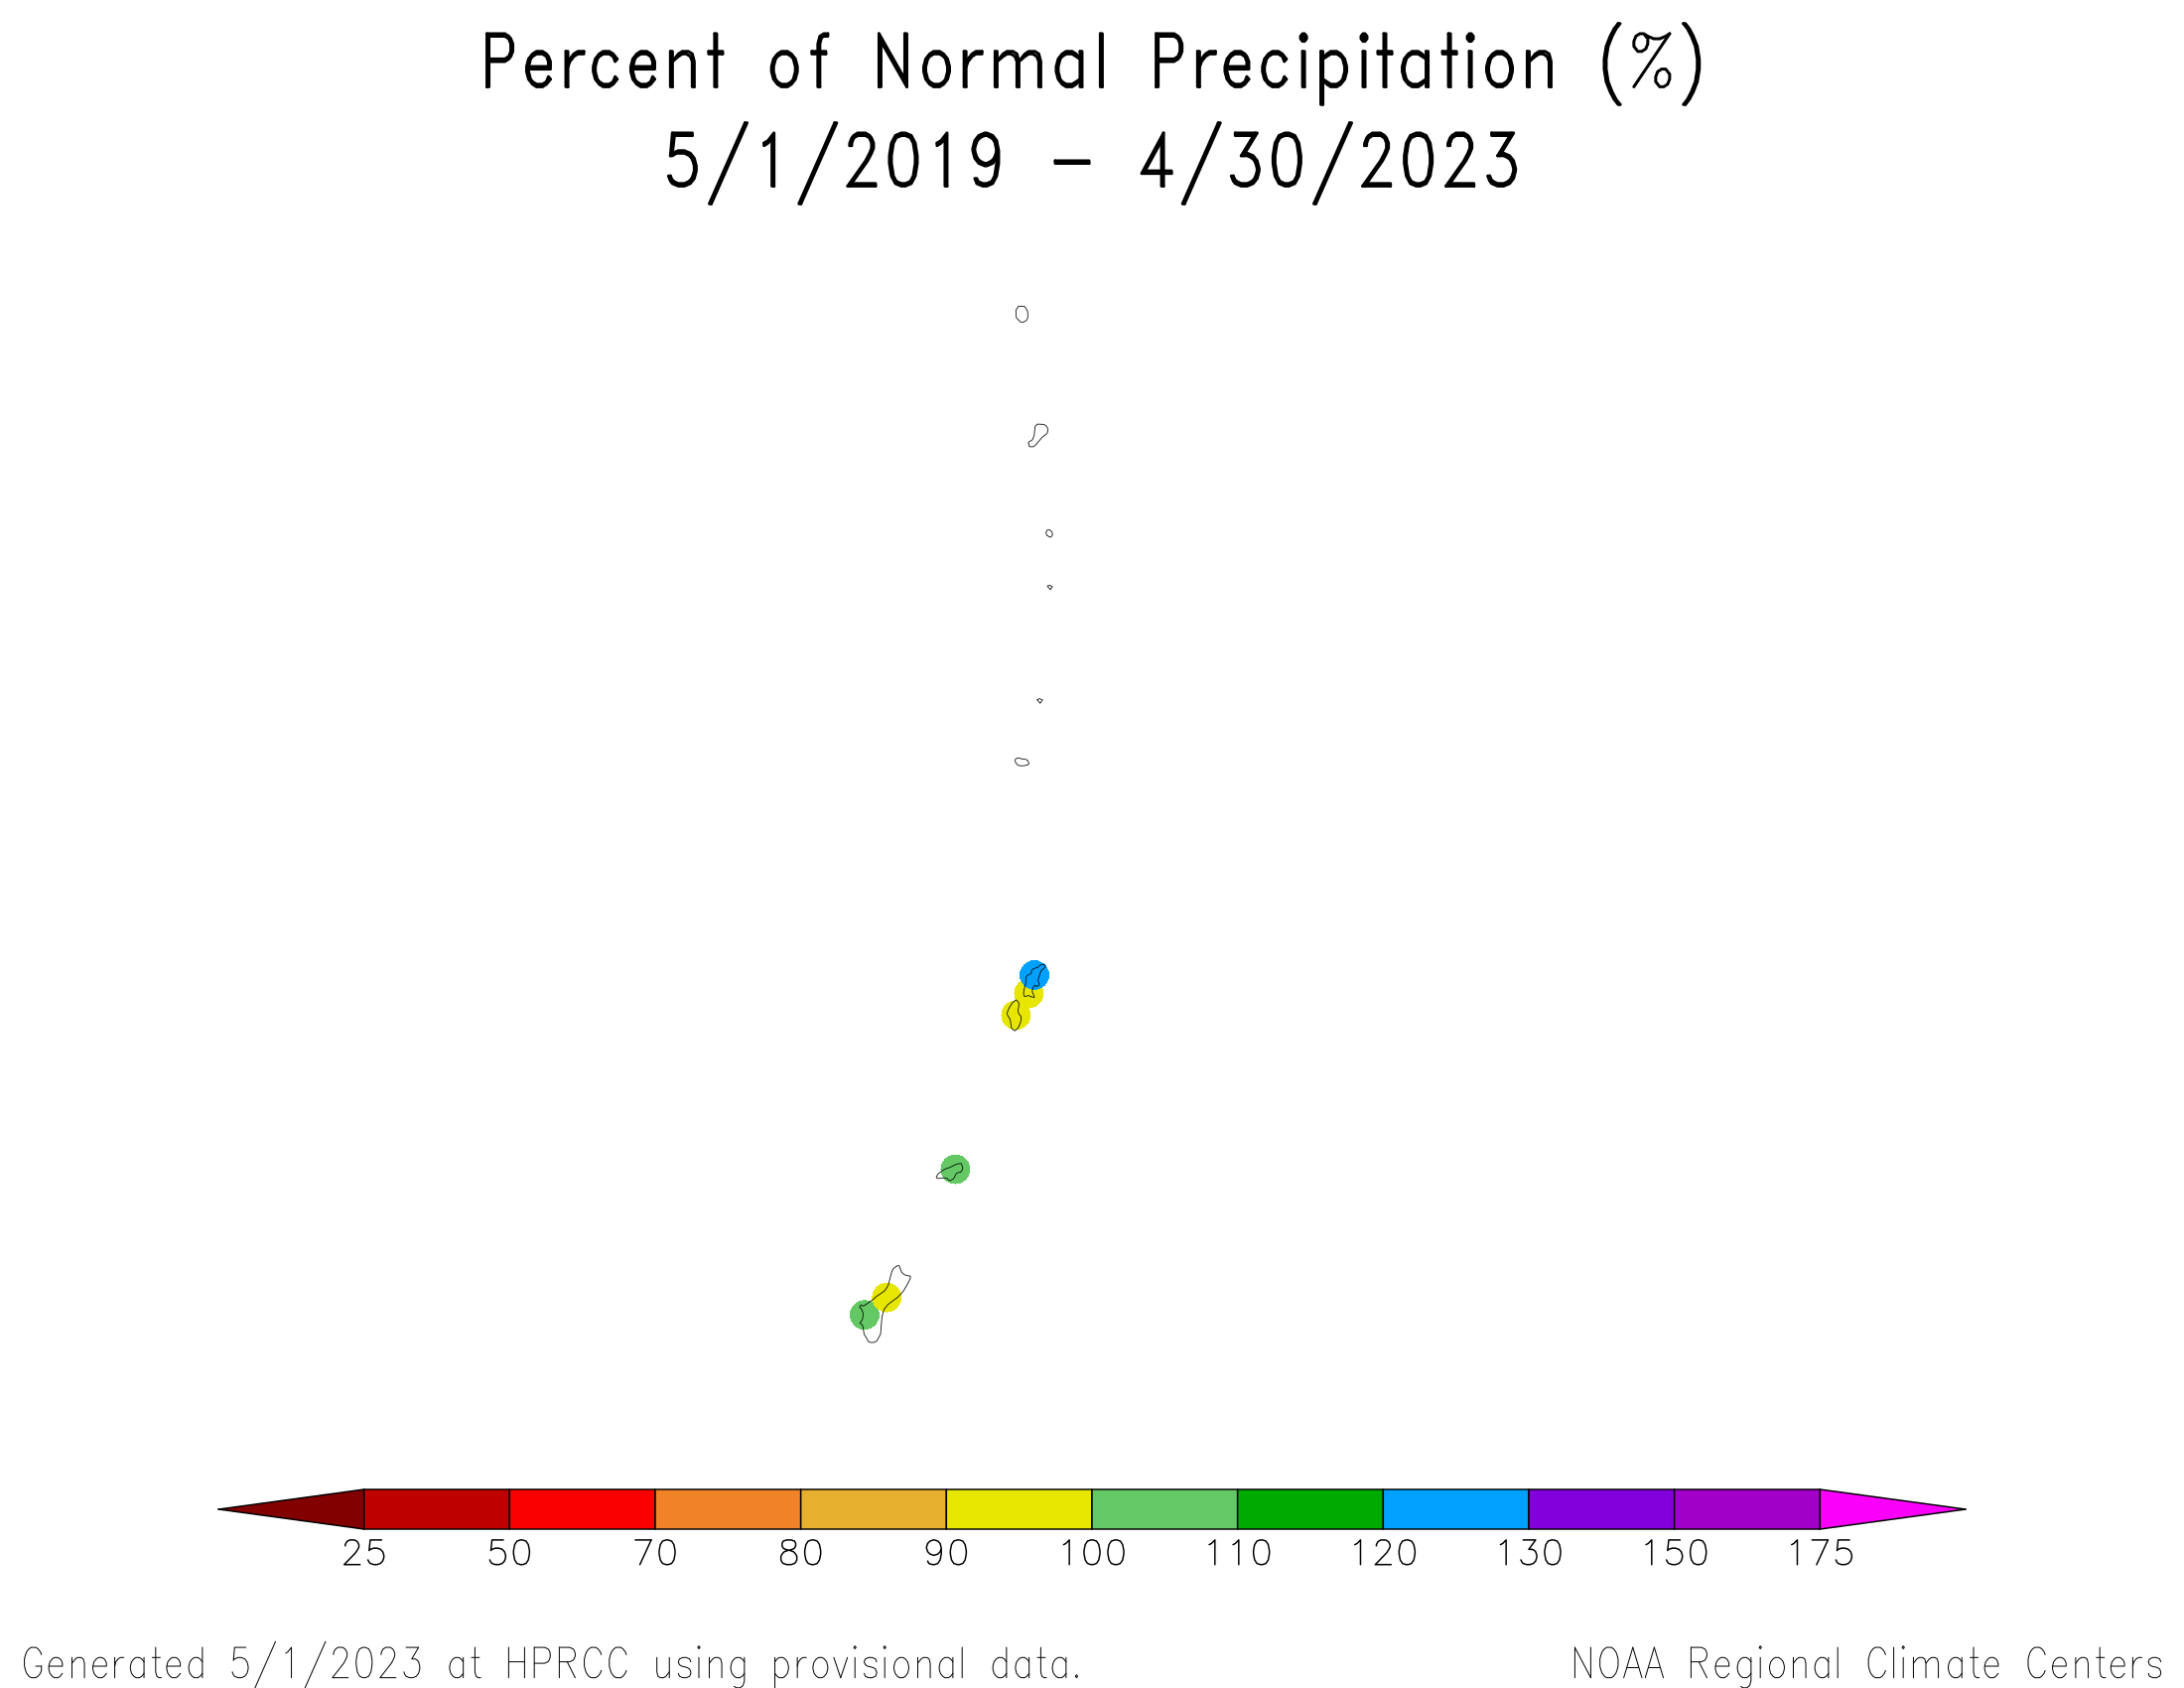 May 2019-April 2023 Percent of Normal Precipitation for the Marianas